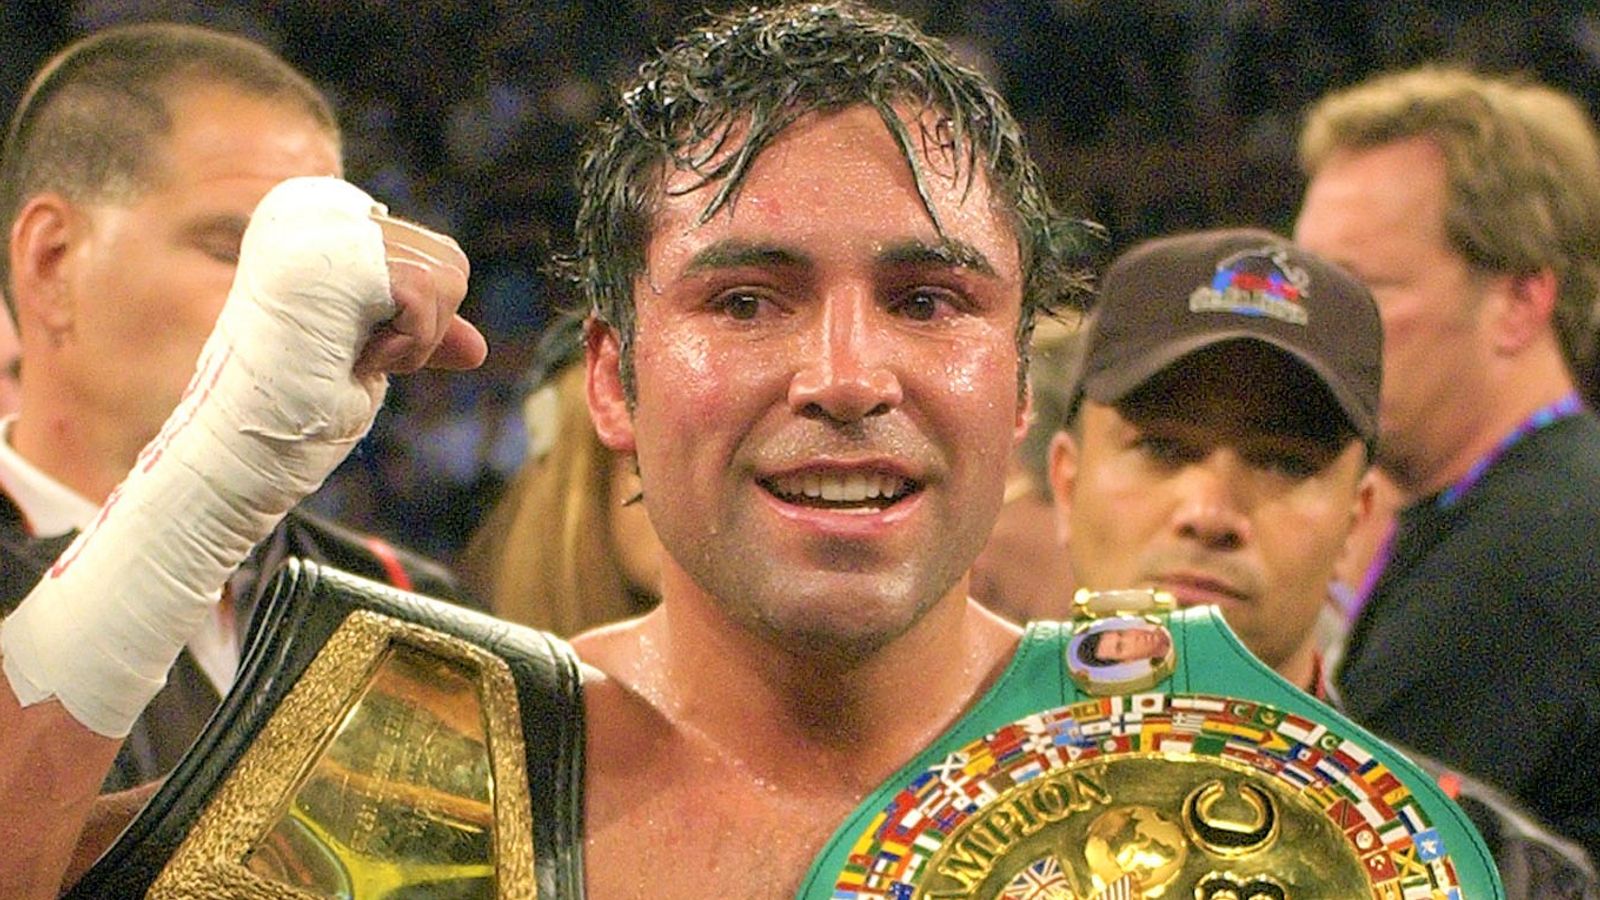 Oscar De La Hoya defeat was more meaningful than winning a world title, say...